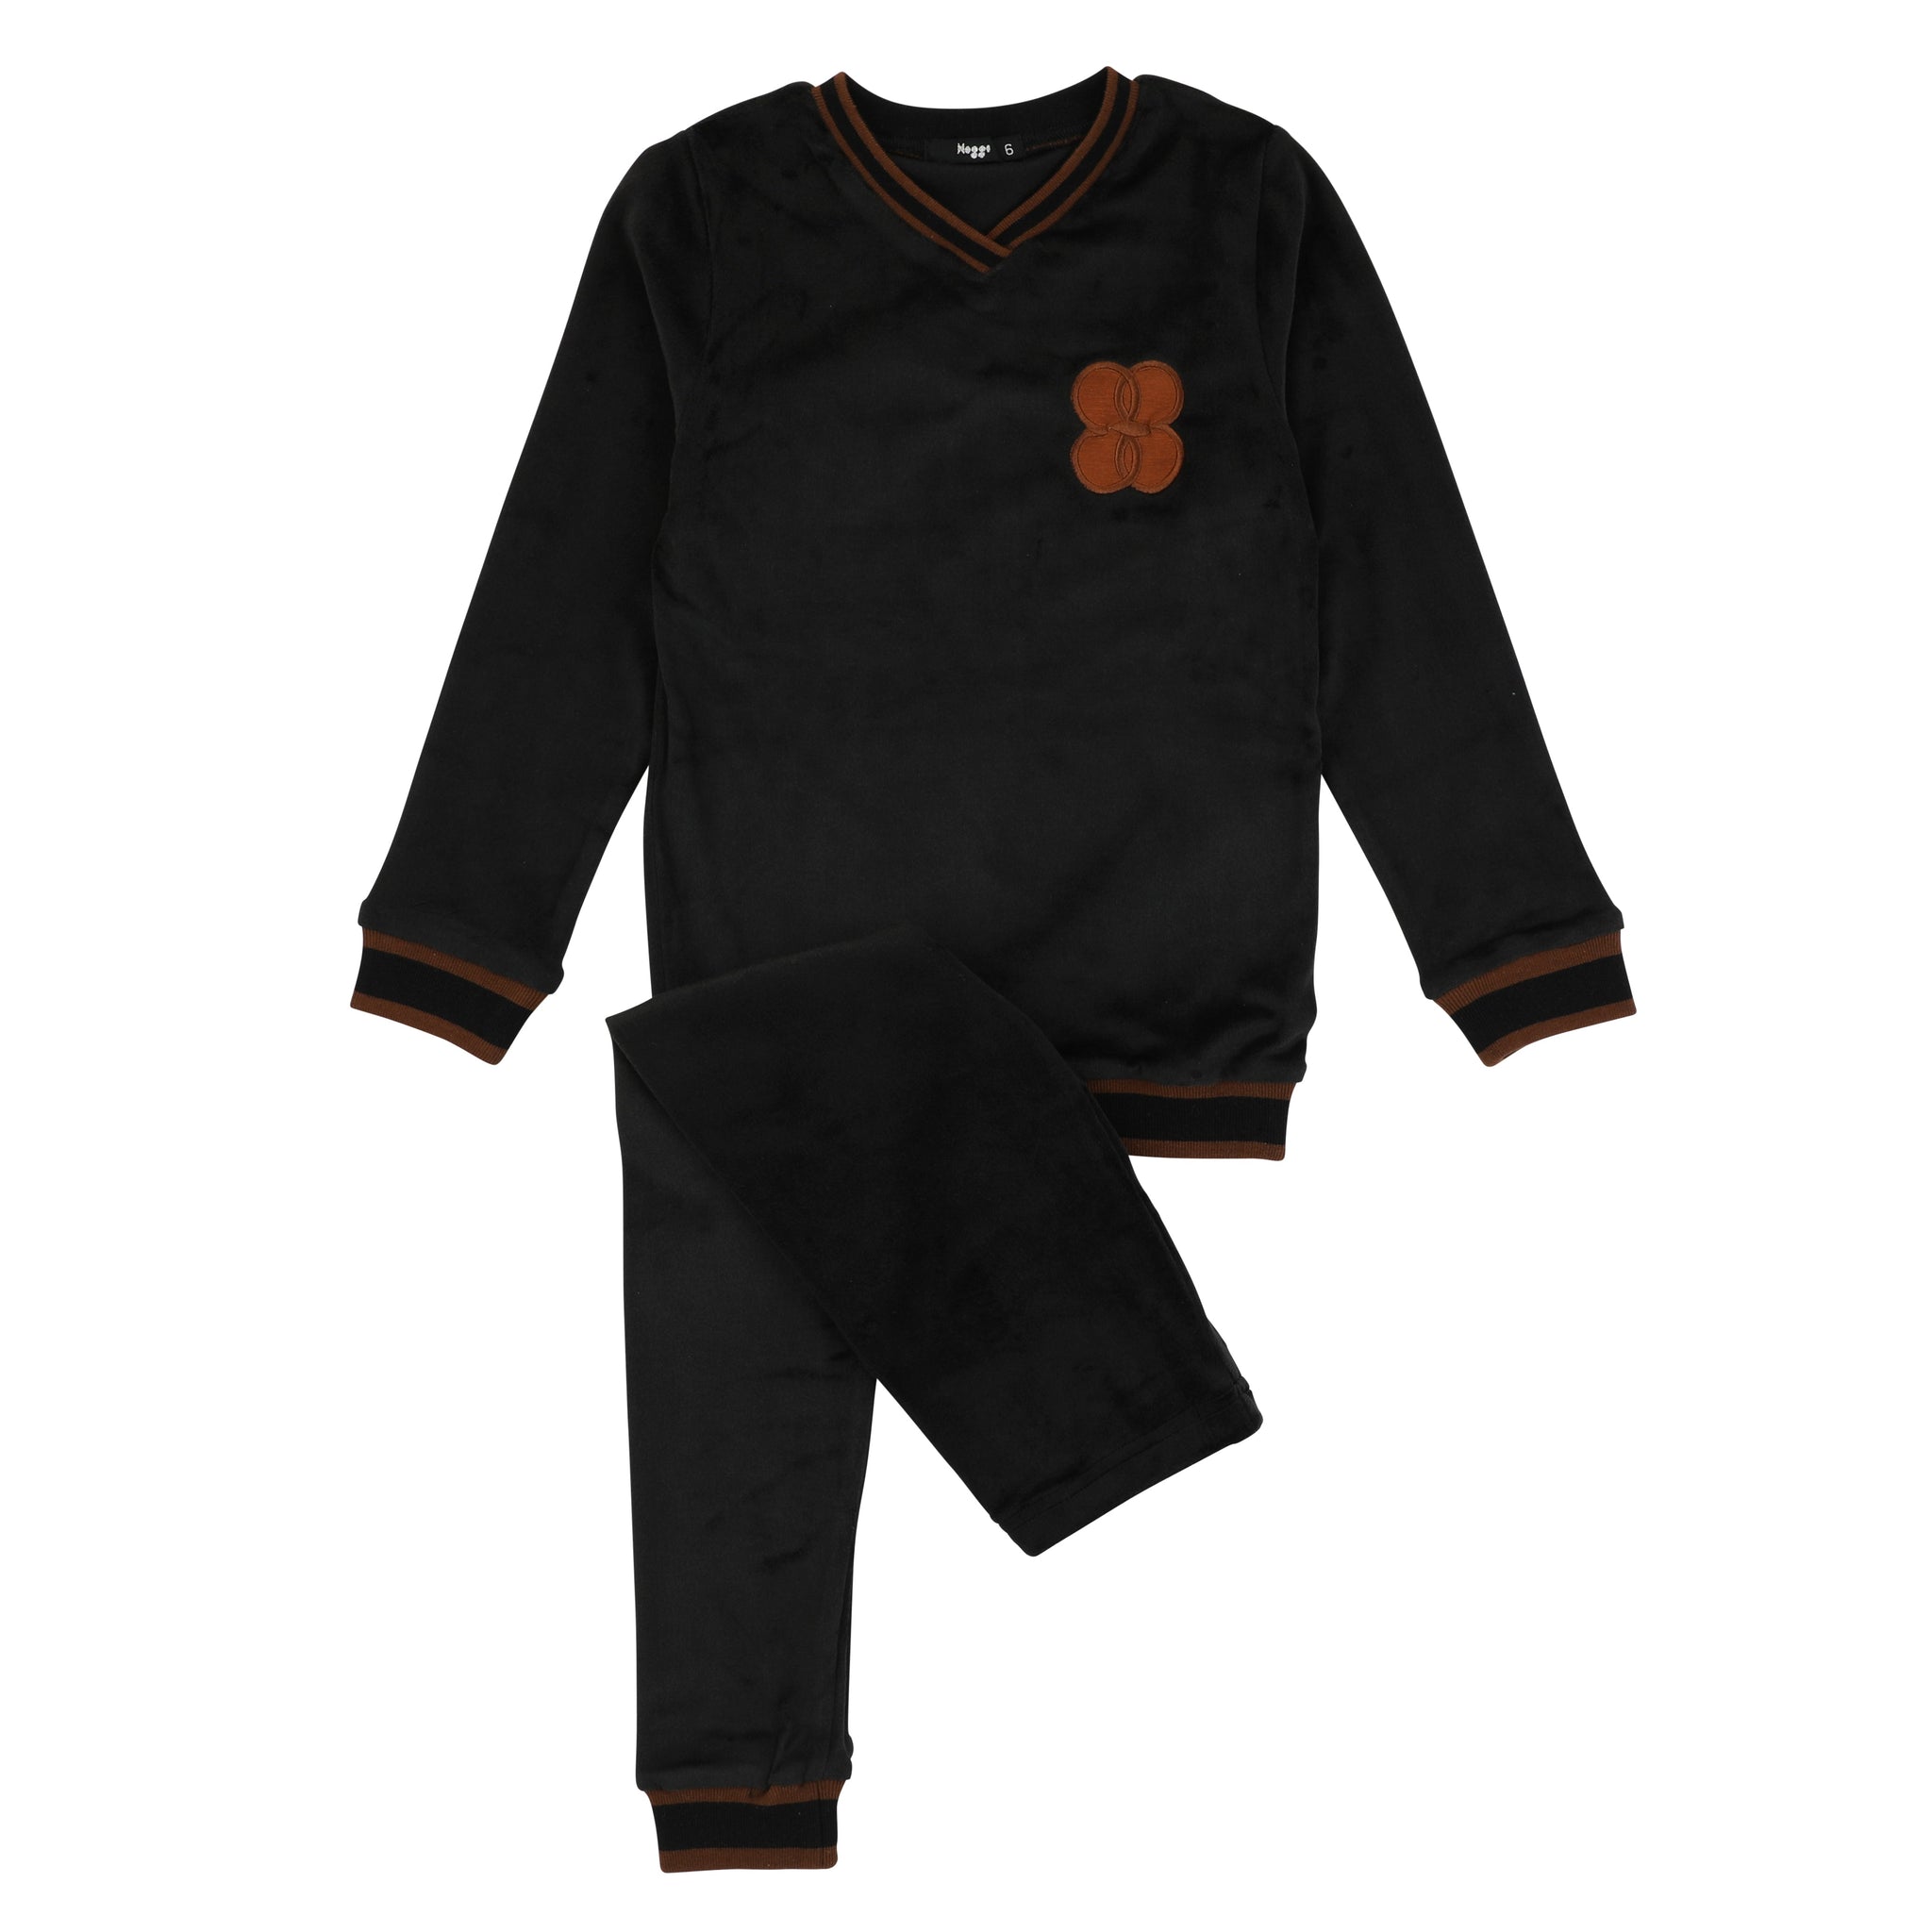 Copper Emblem and Trim Loungewear Set, Black Velour - HoneyBug 